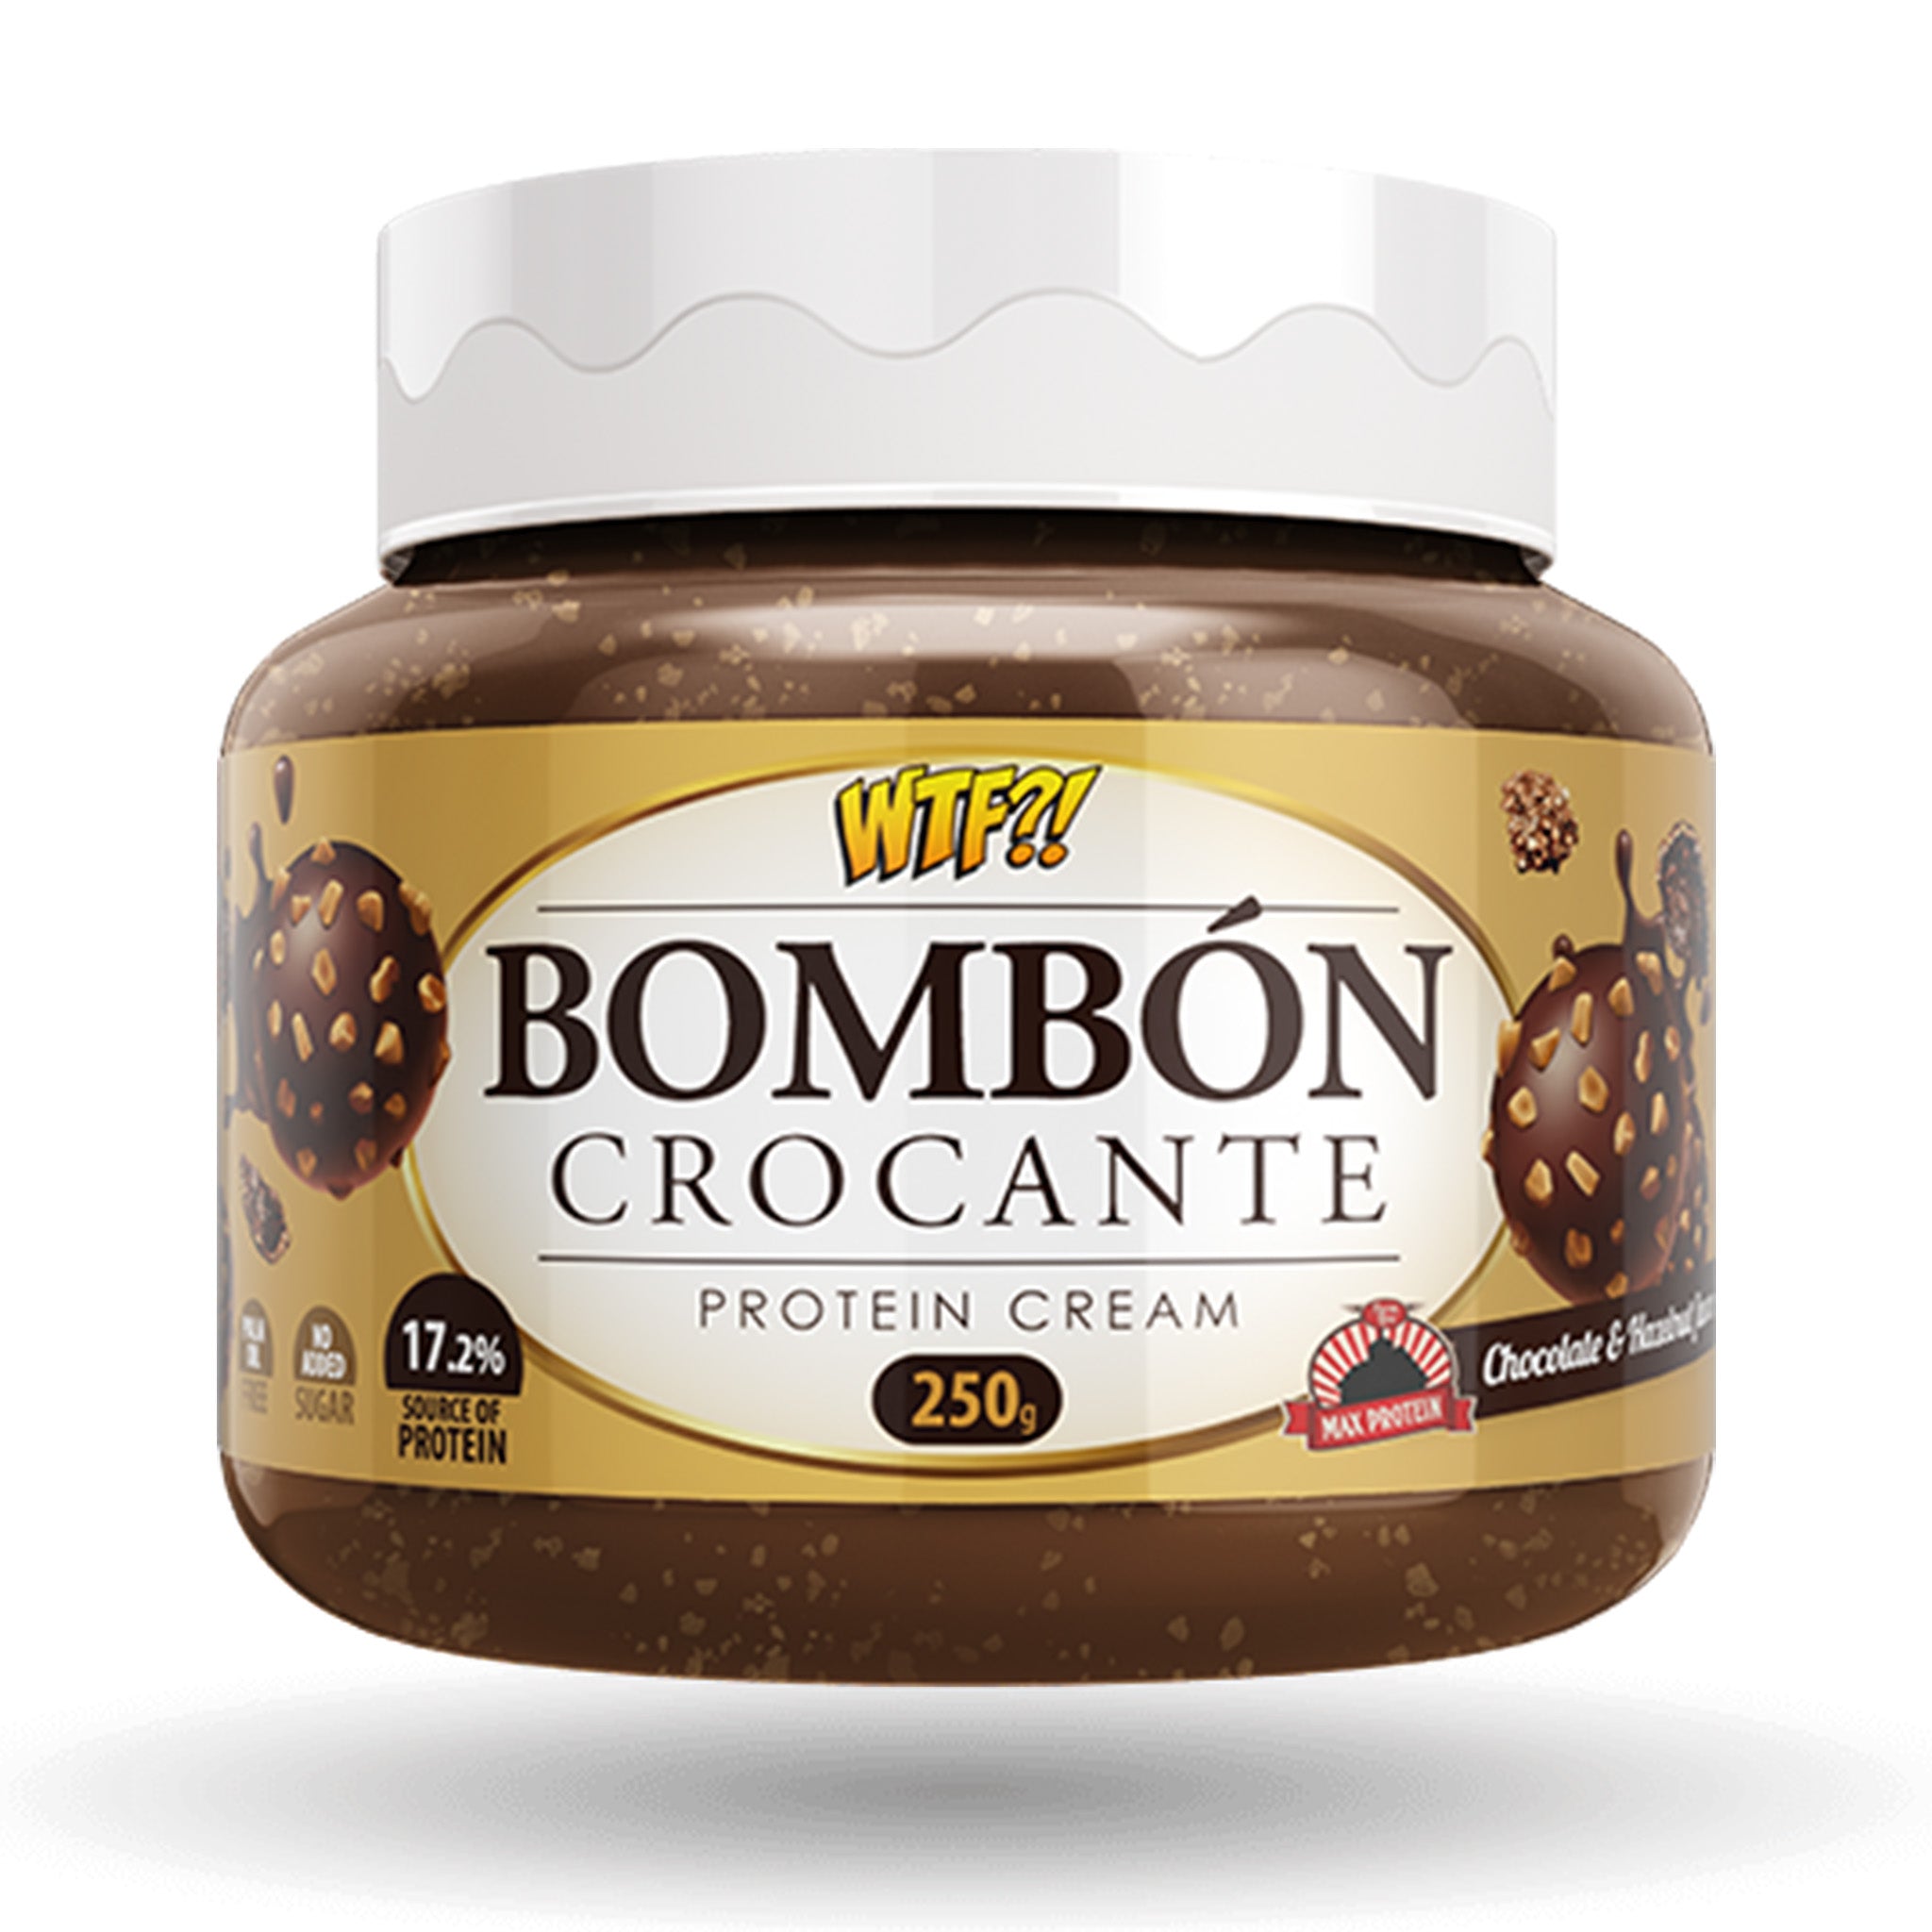 Protein Cream Bombon Crocante (250g)